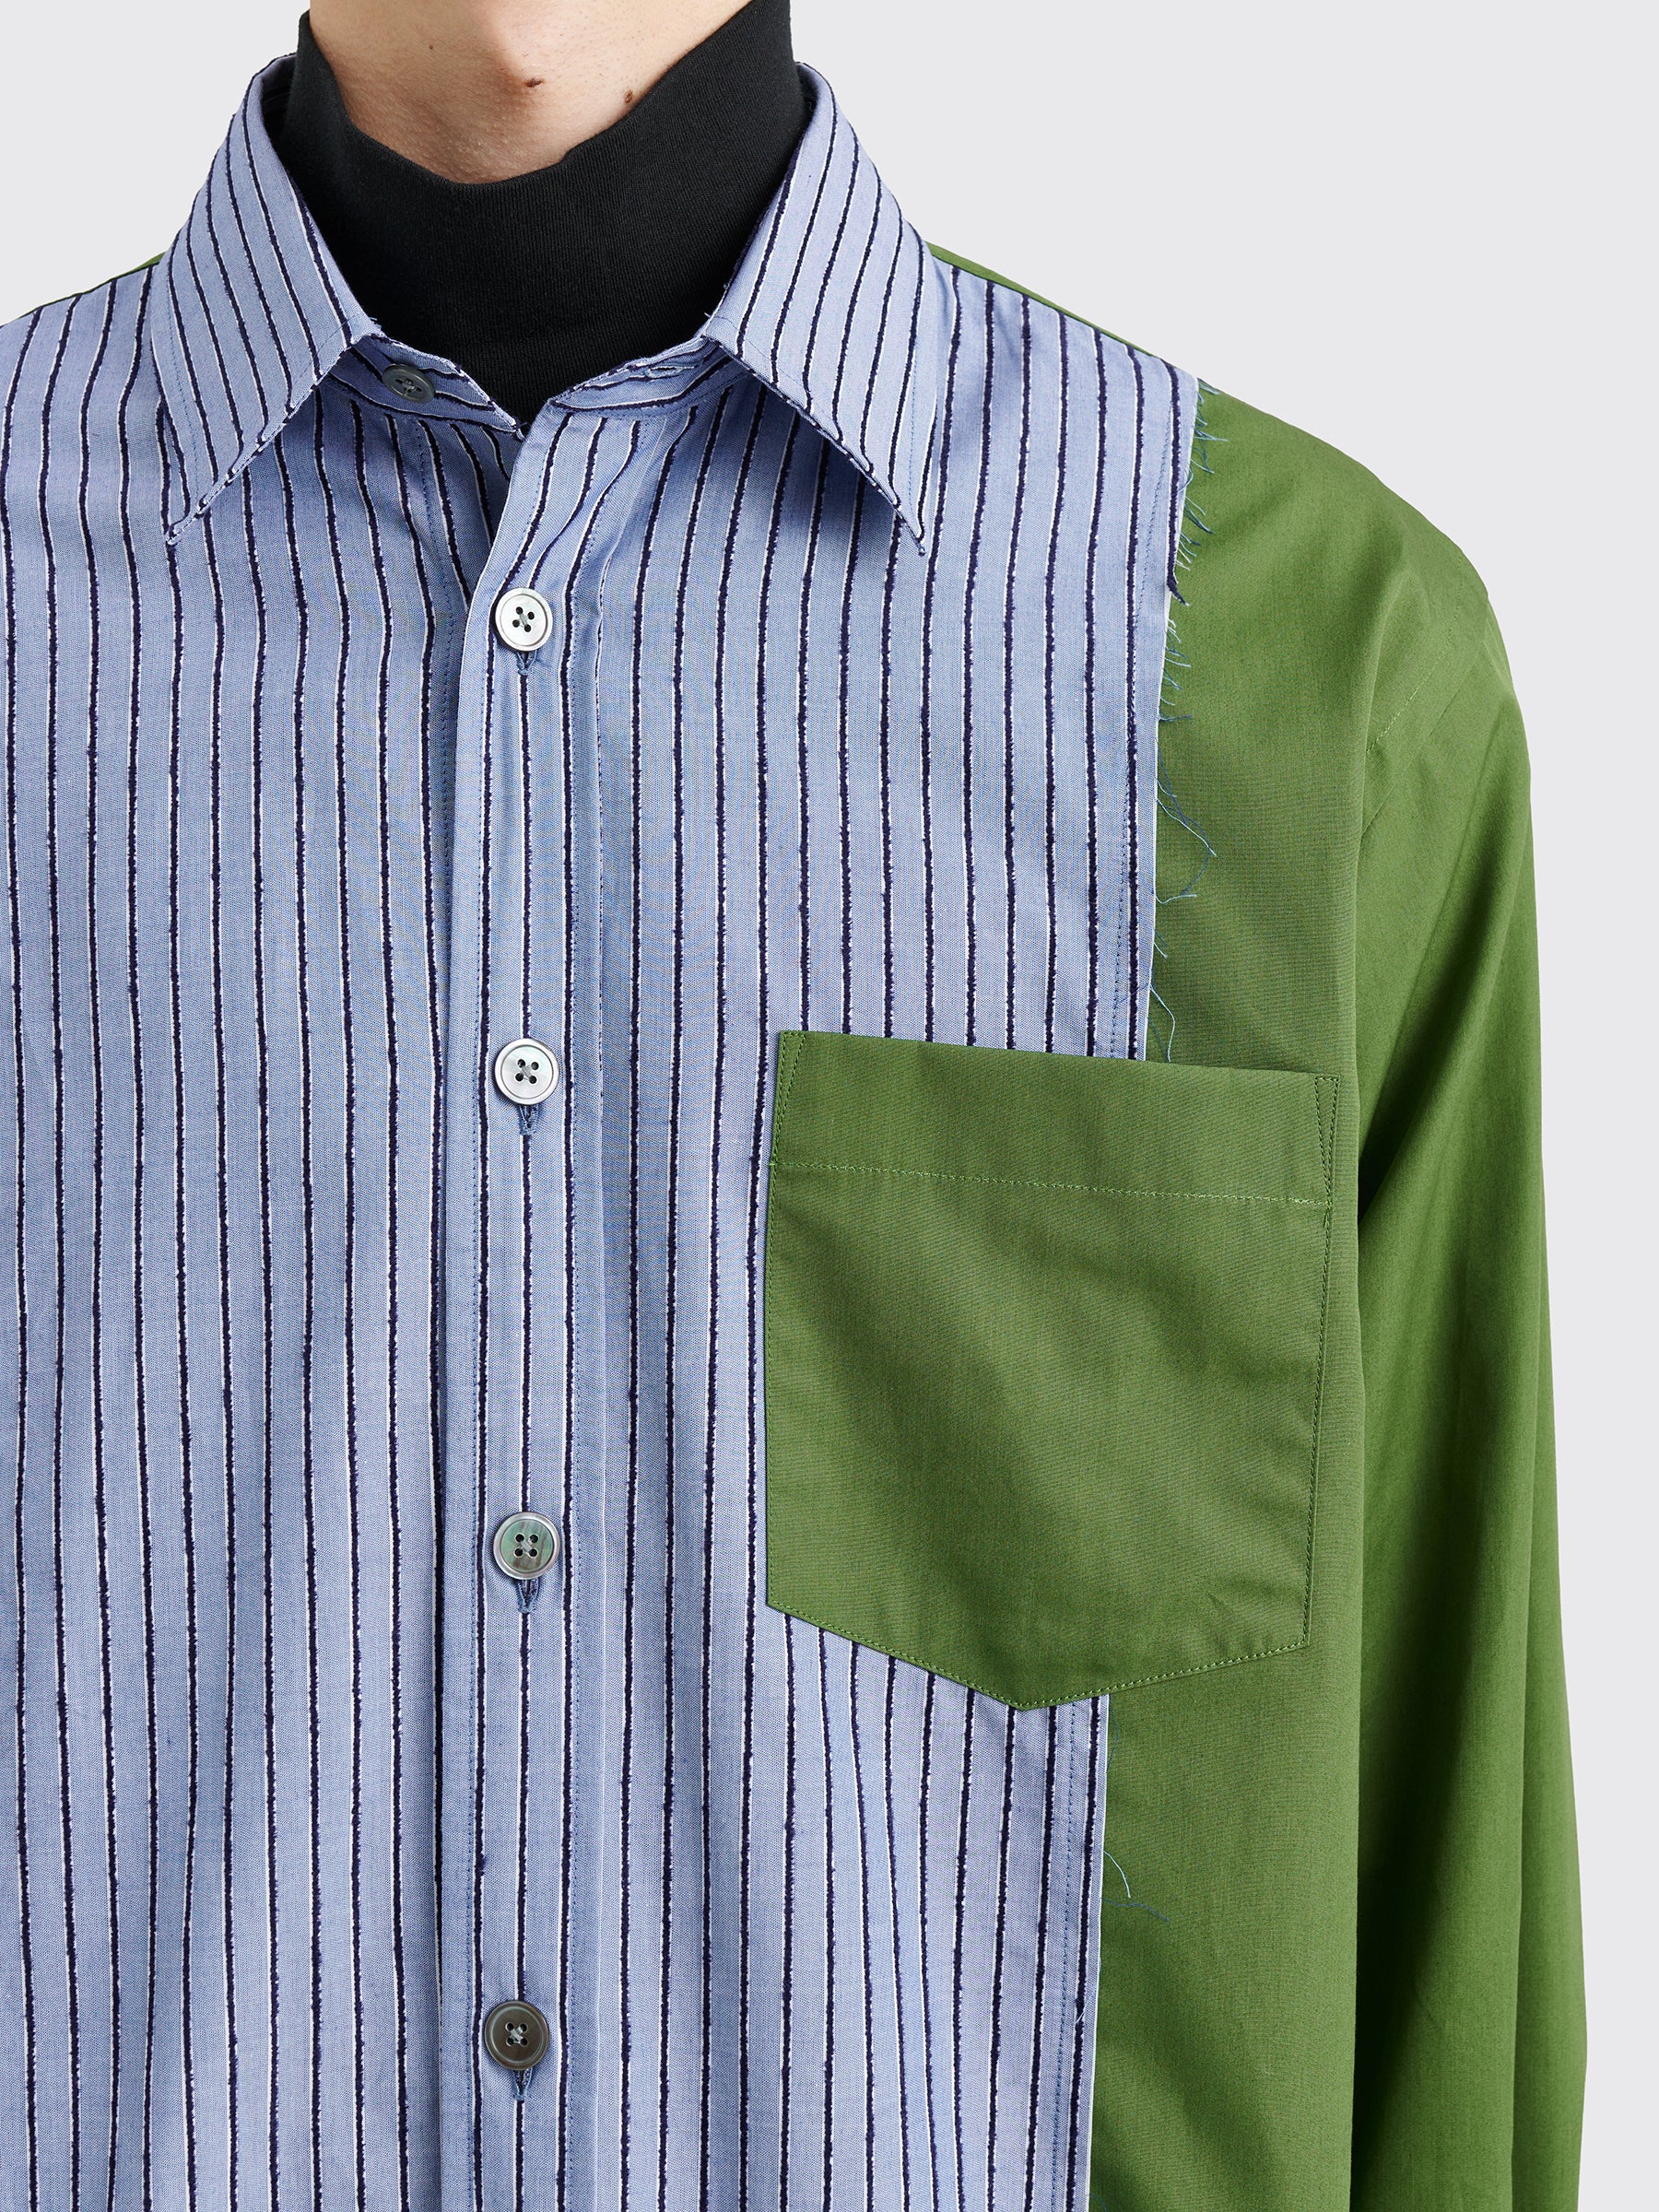 TRÈS BIEN everywear Raw Seam Oversized Classic Shirt Cotton Green Stripe